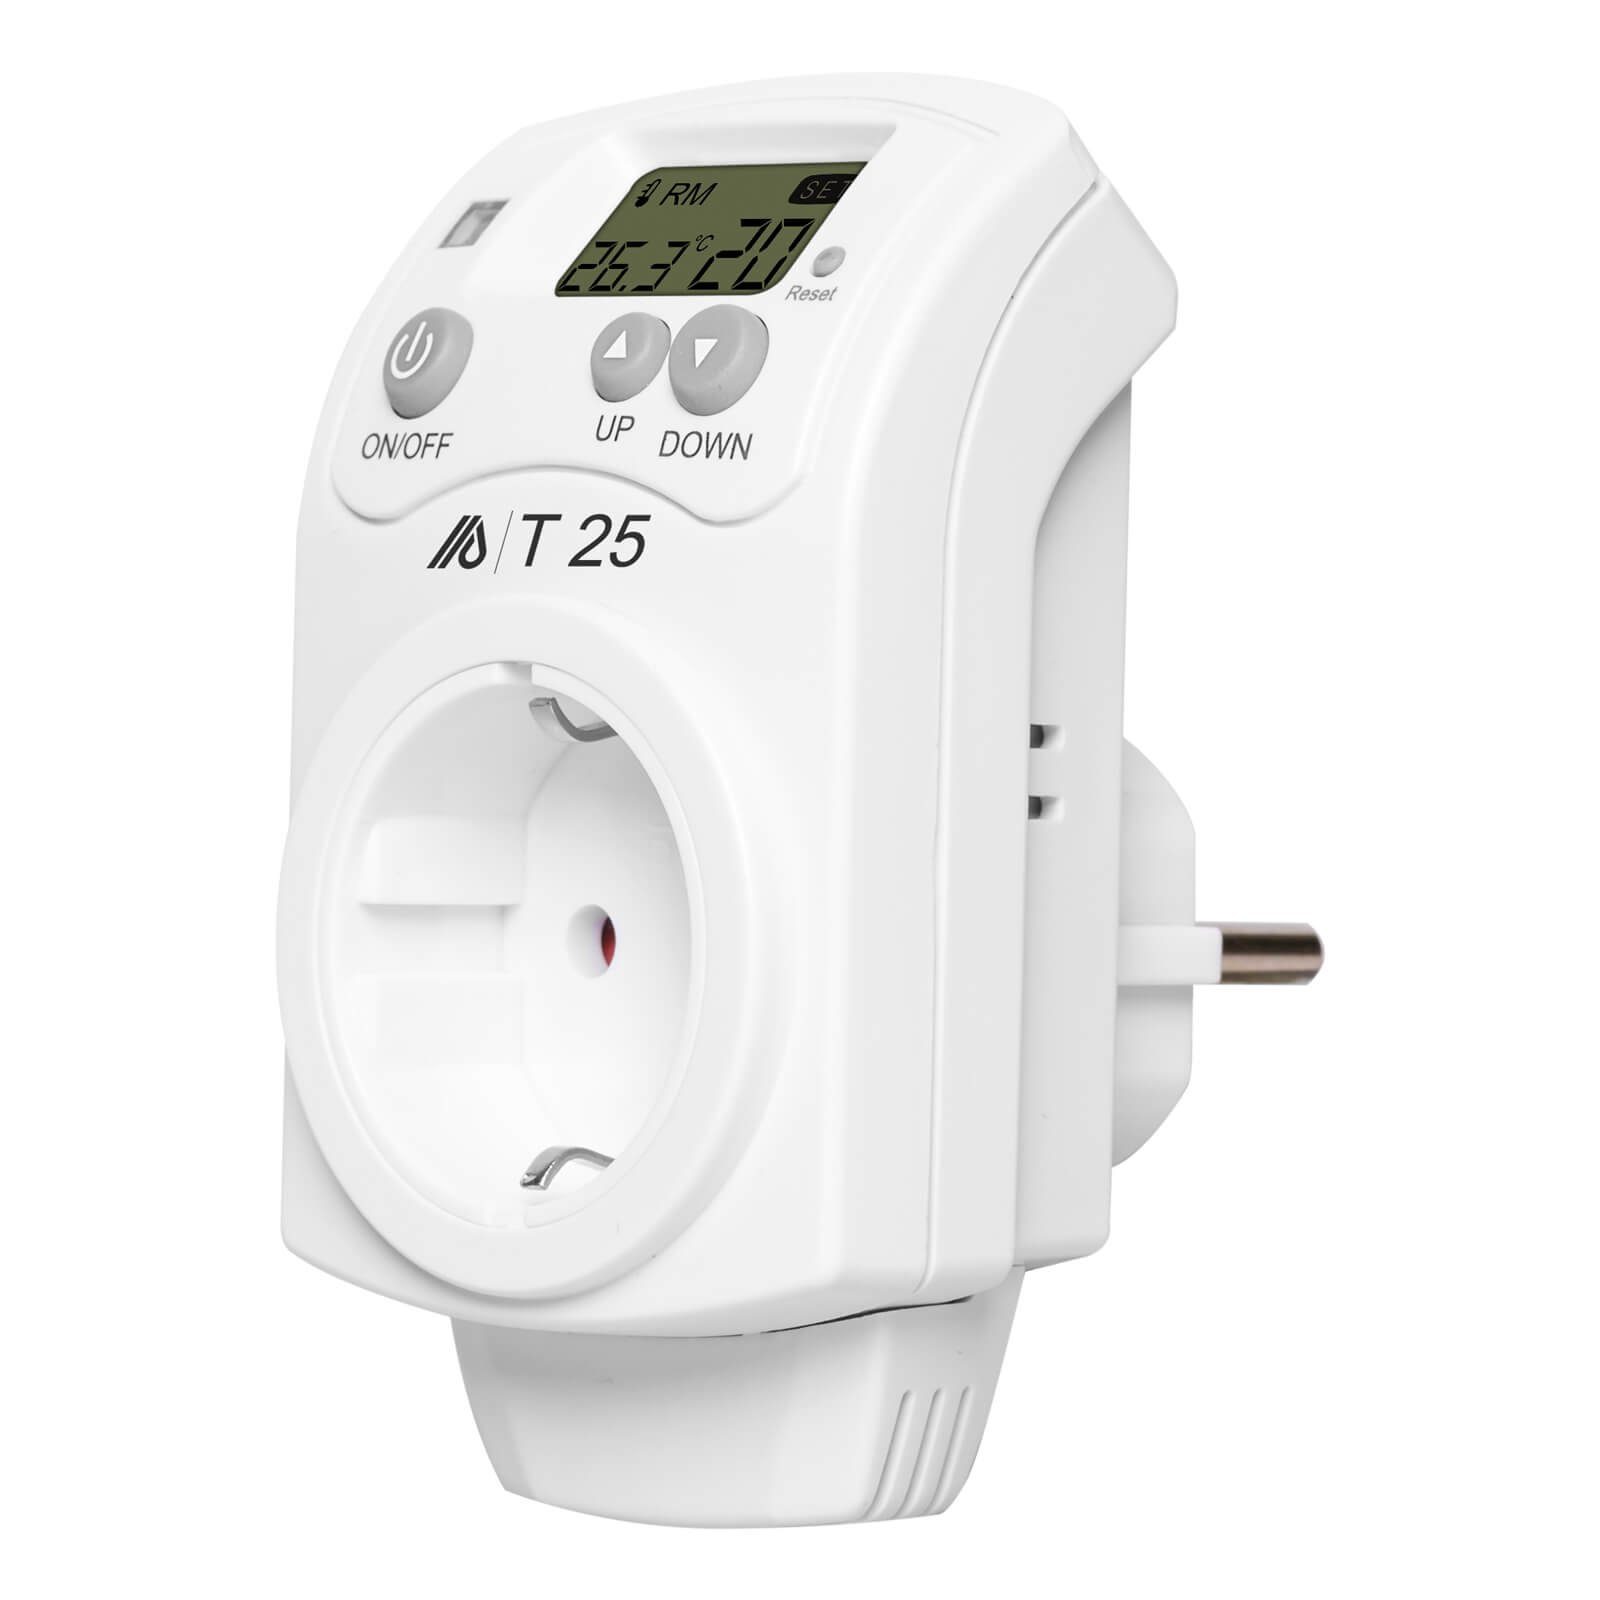 ALLEGRA Steckdosen-Thermostat W max. T25, 3680 Steckdosenthermostat